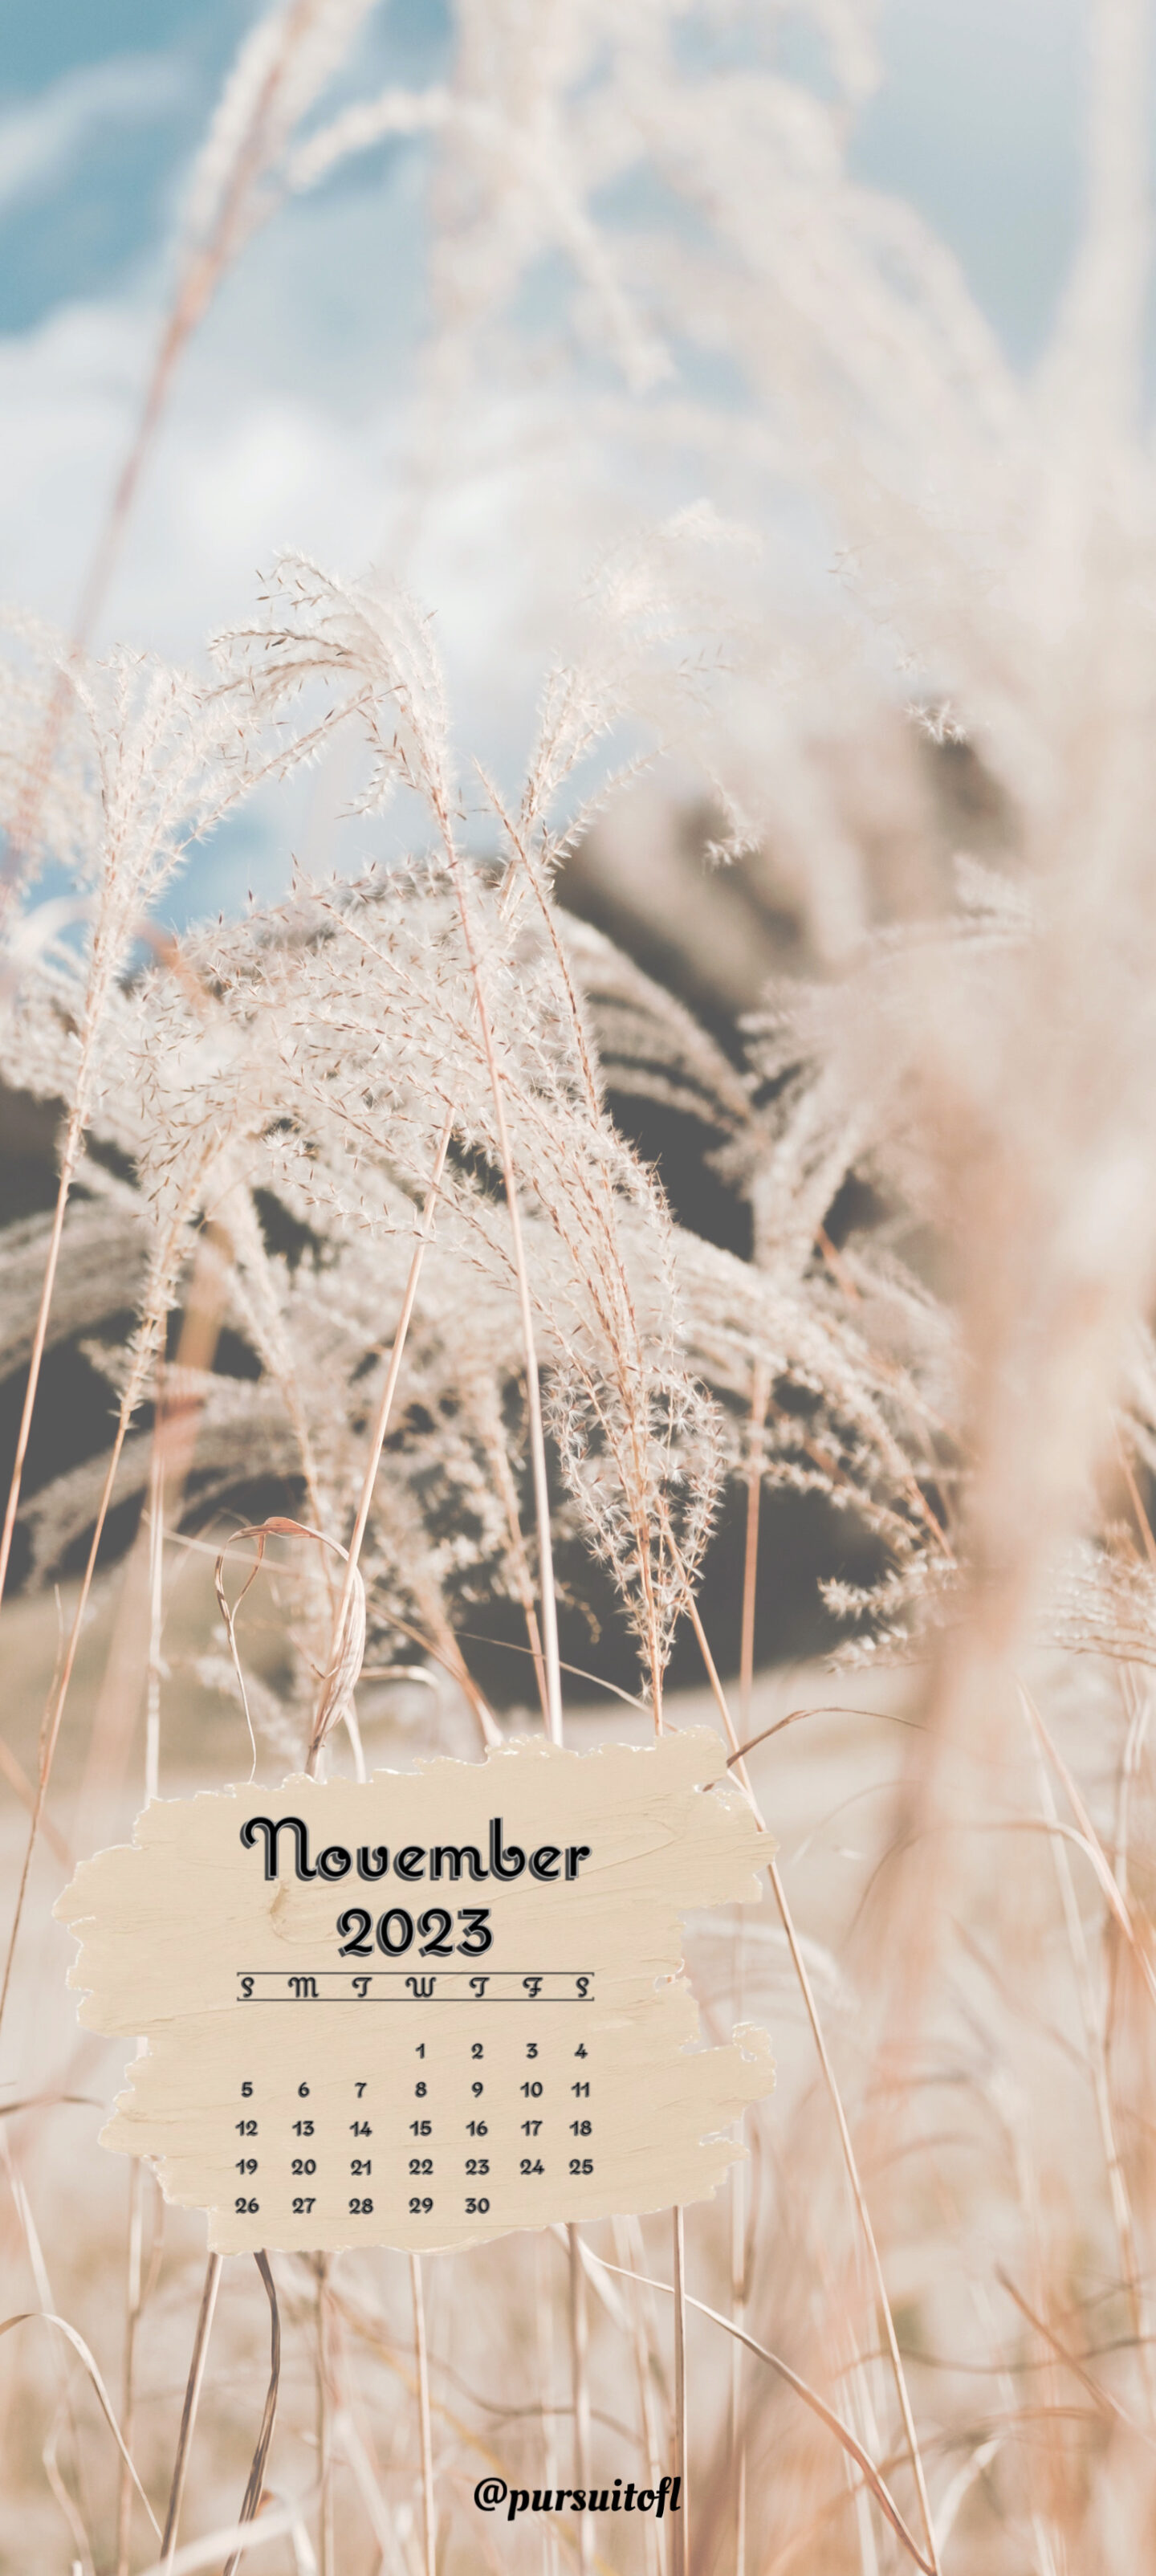 Fall Nature Phone Wallpaper with November 2023 Calendar 